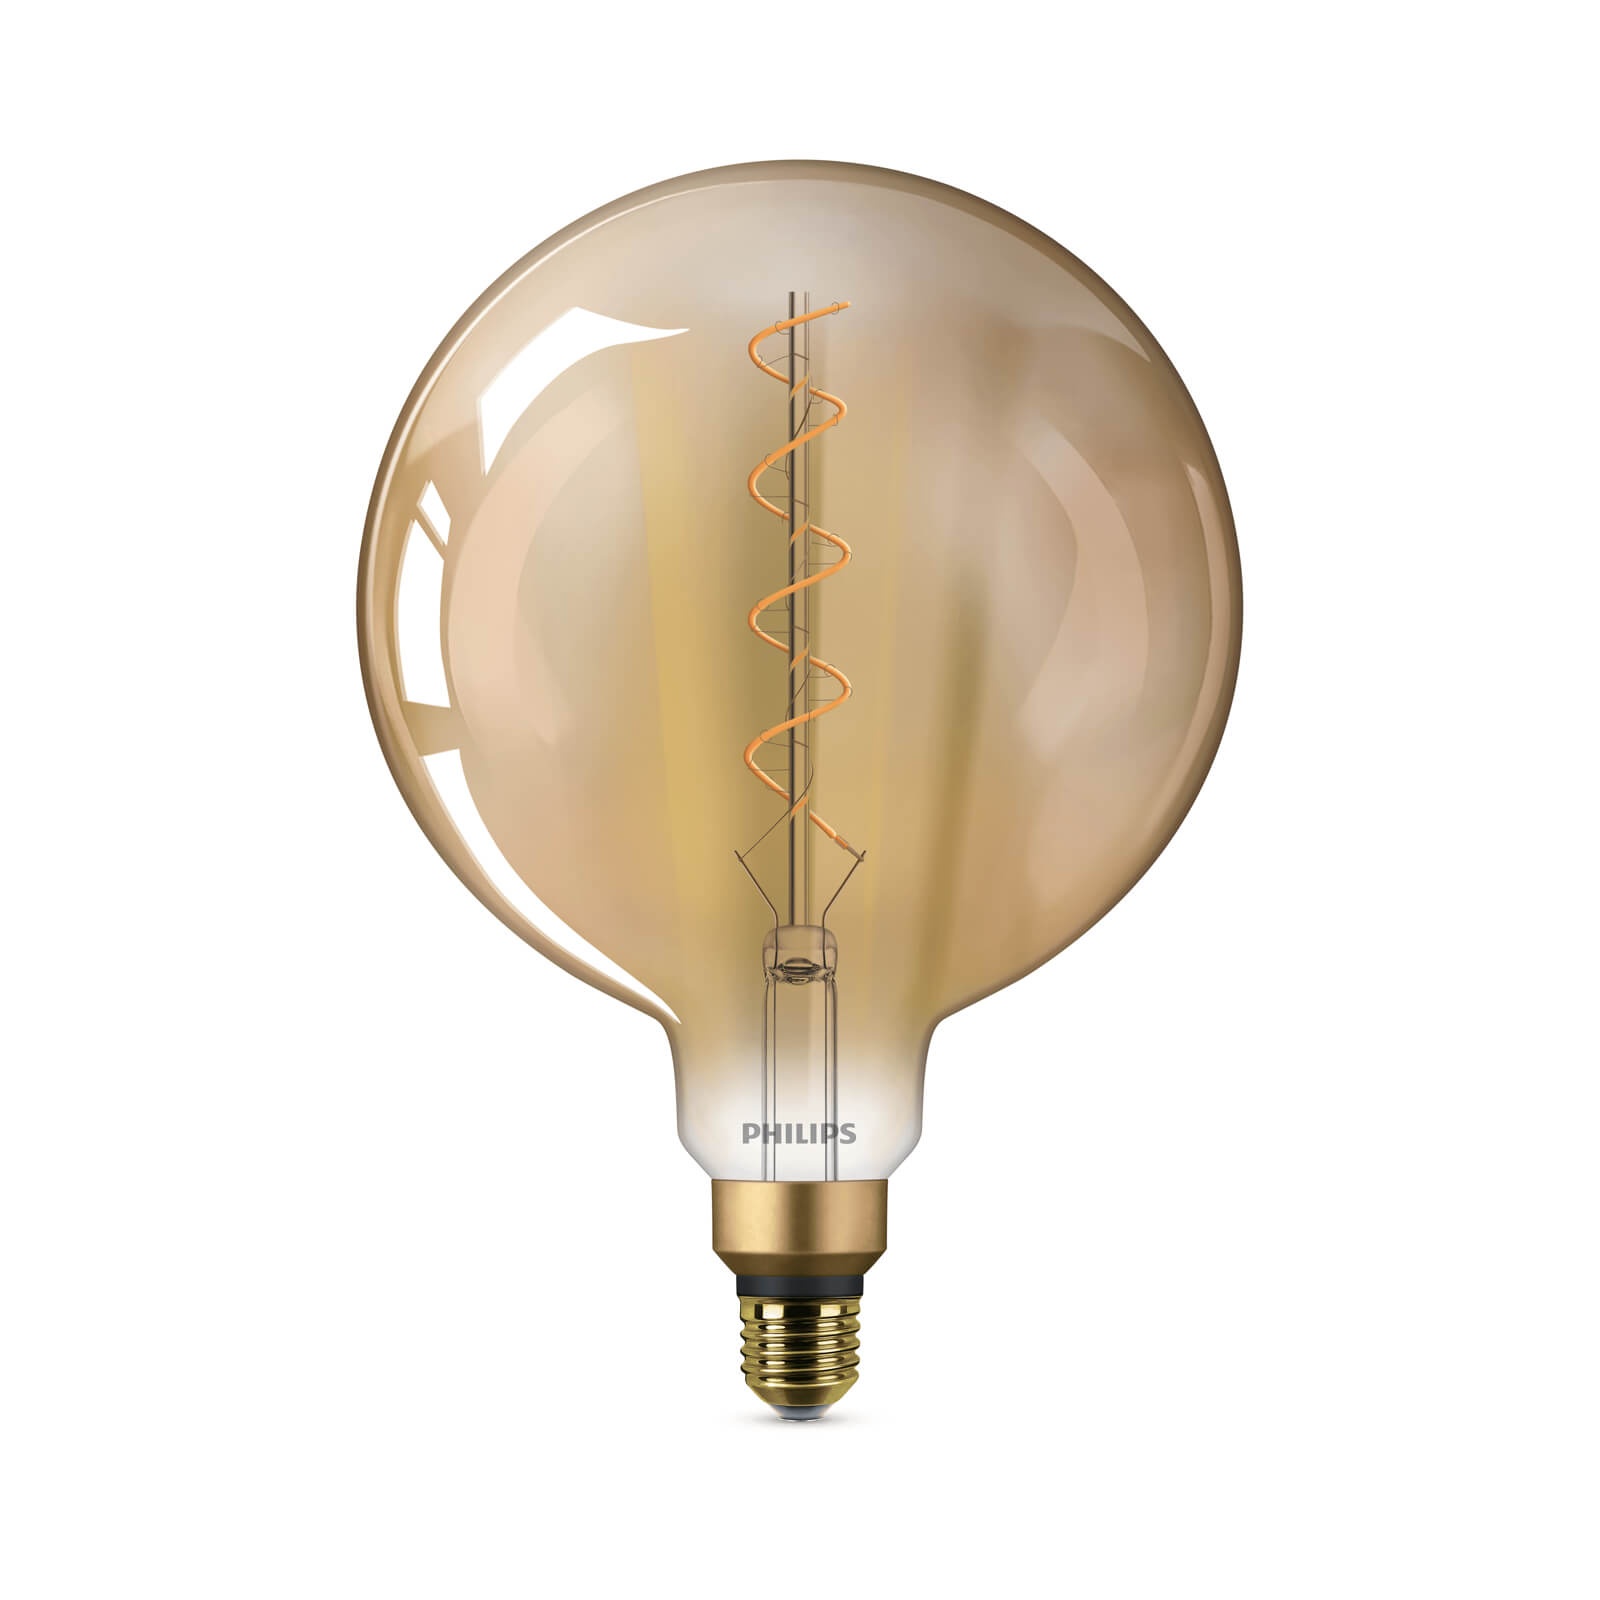 Philips LED Lamp Globe Giant Flame 5W (25W) E27